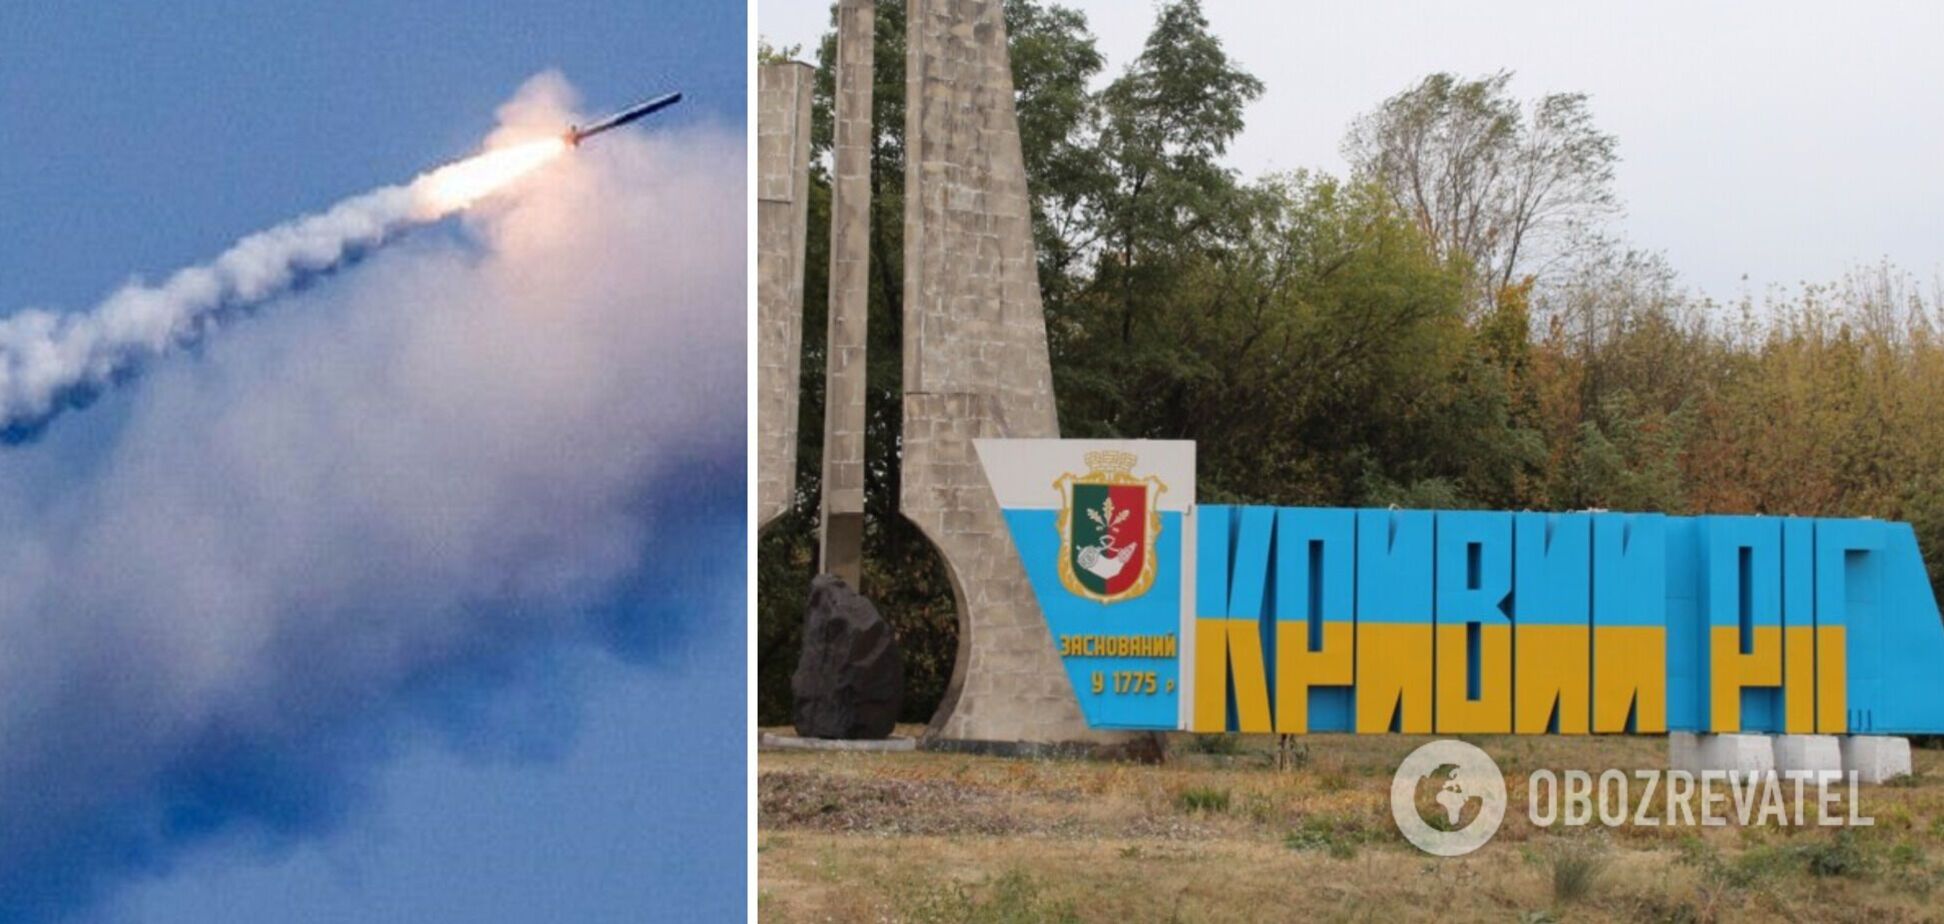 Войска РФ ударили ракетами по аэропорту Кривого Рога, его инфраструктура разрушена